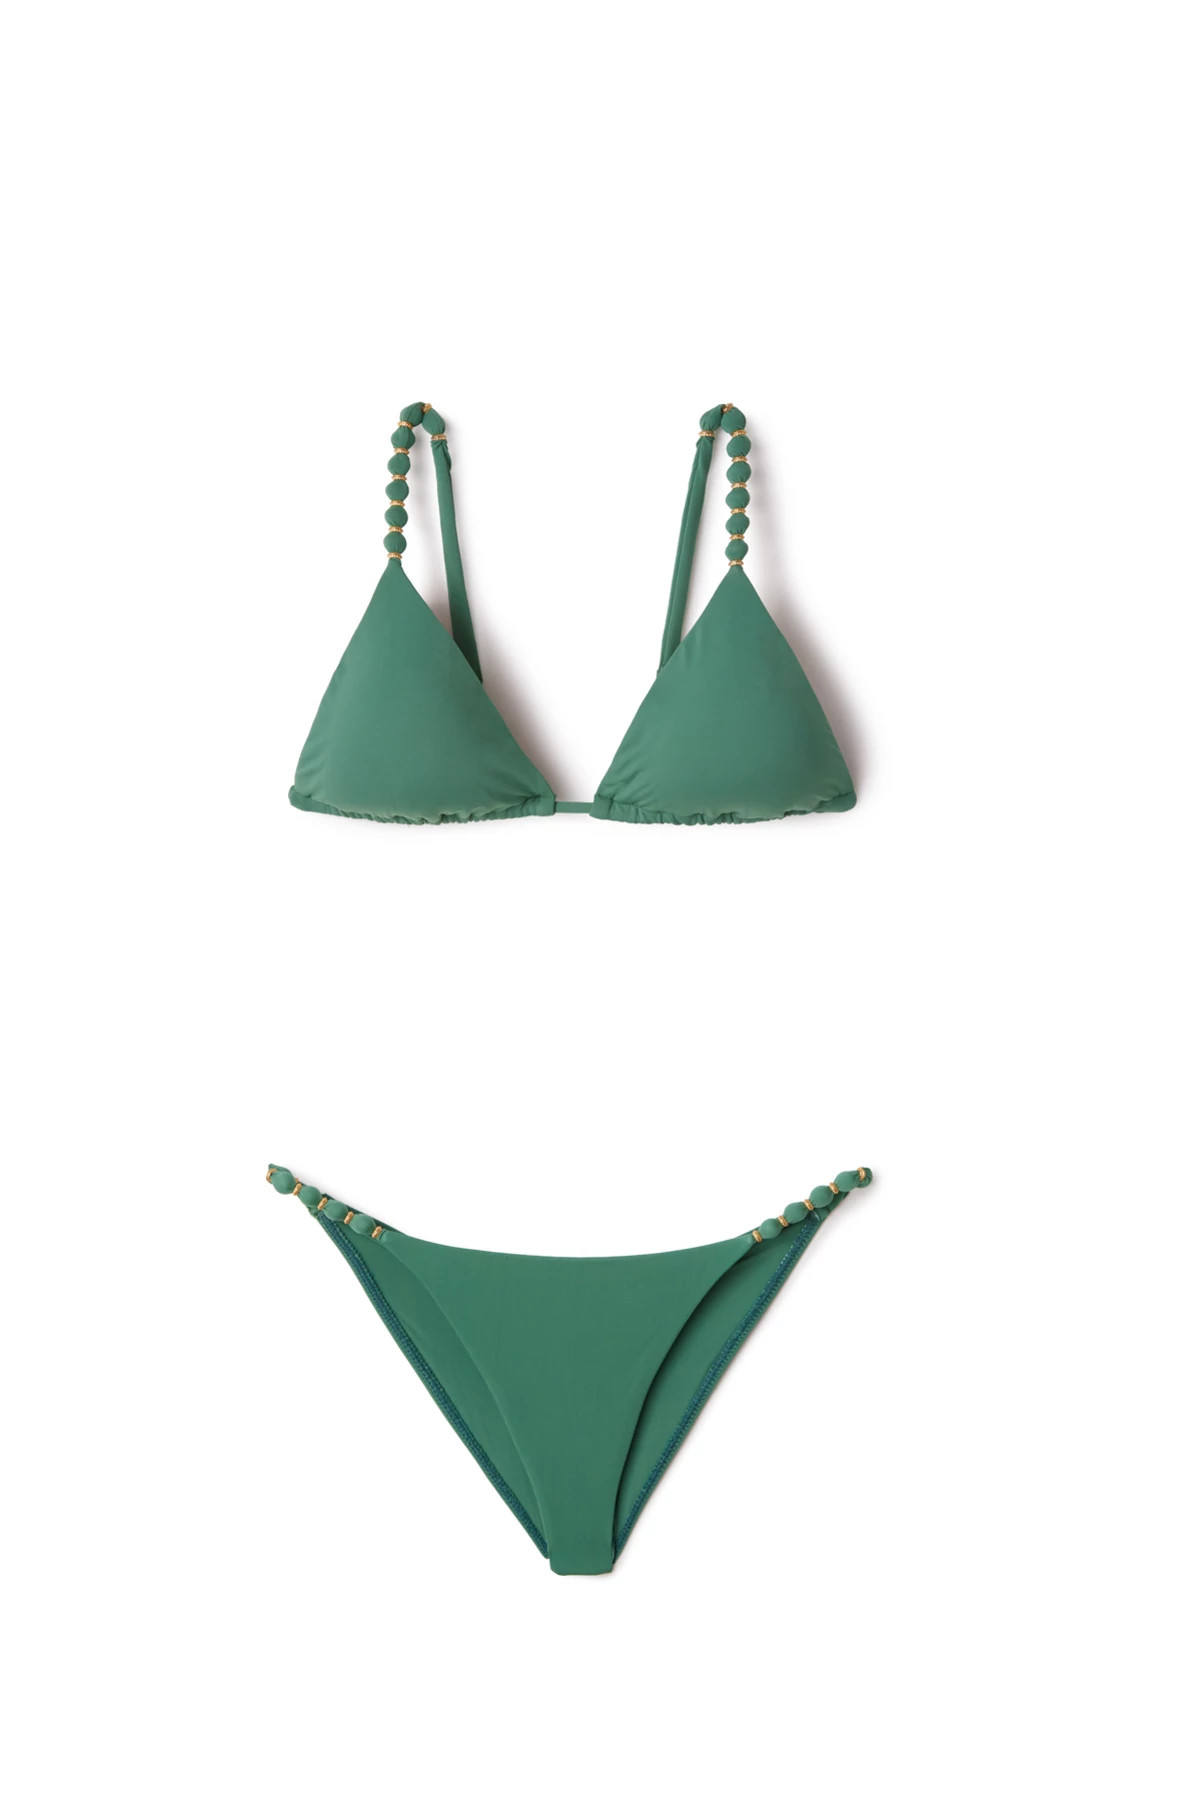 Aspen bikini top - Green rib